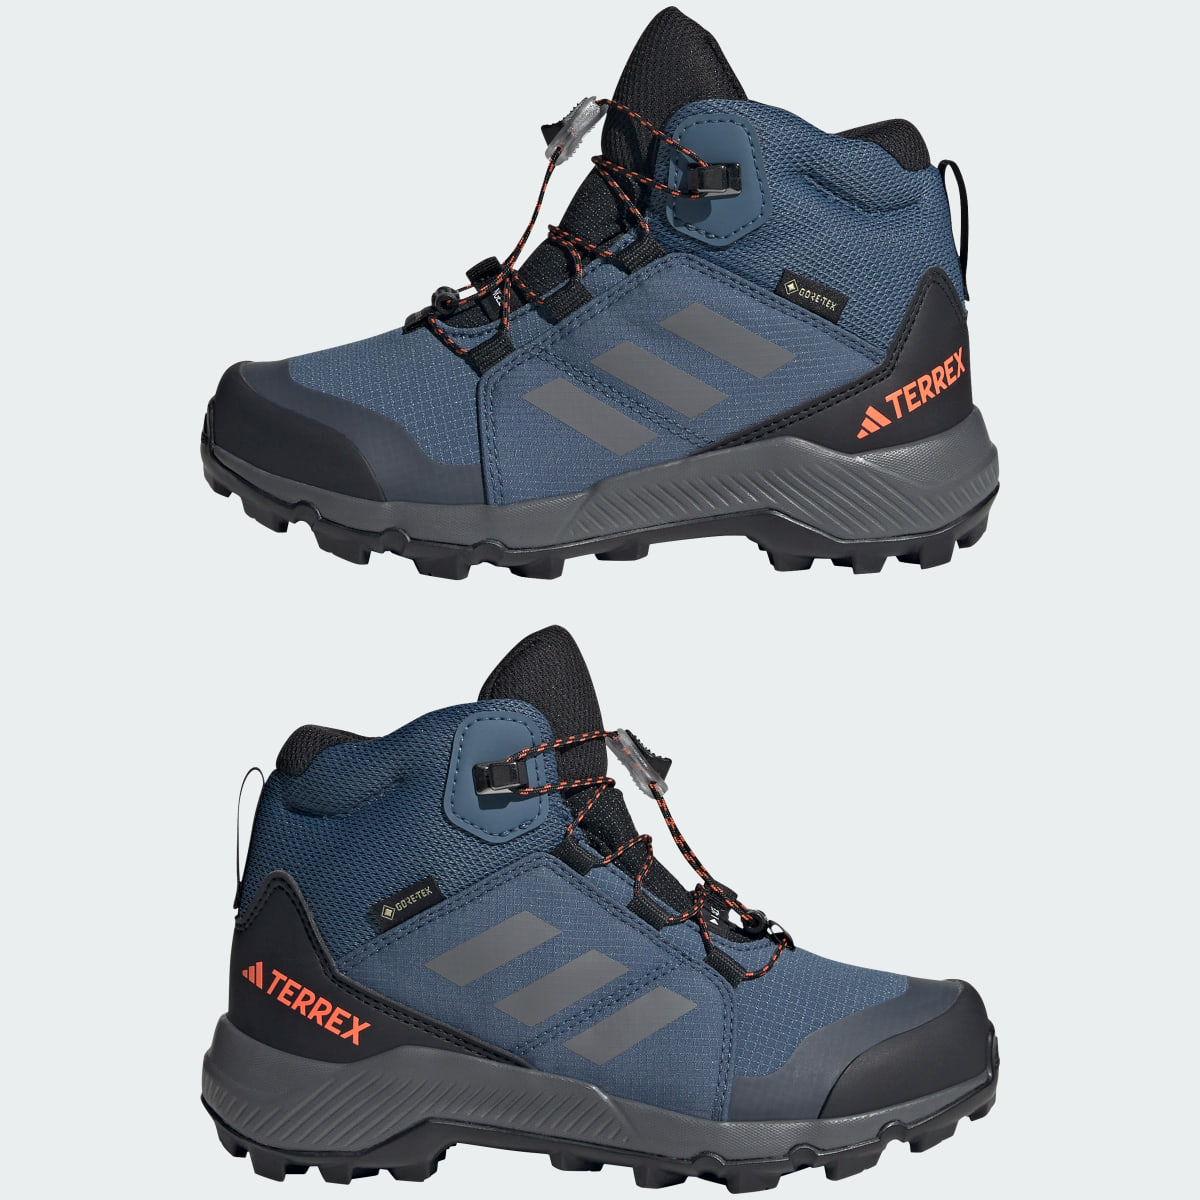 Adidas Terrex Mid GORE-TEX Hiking Shoes. 9